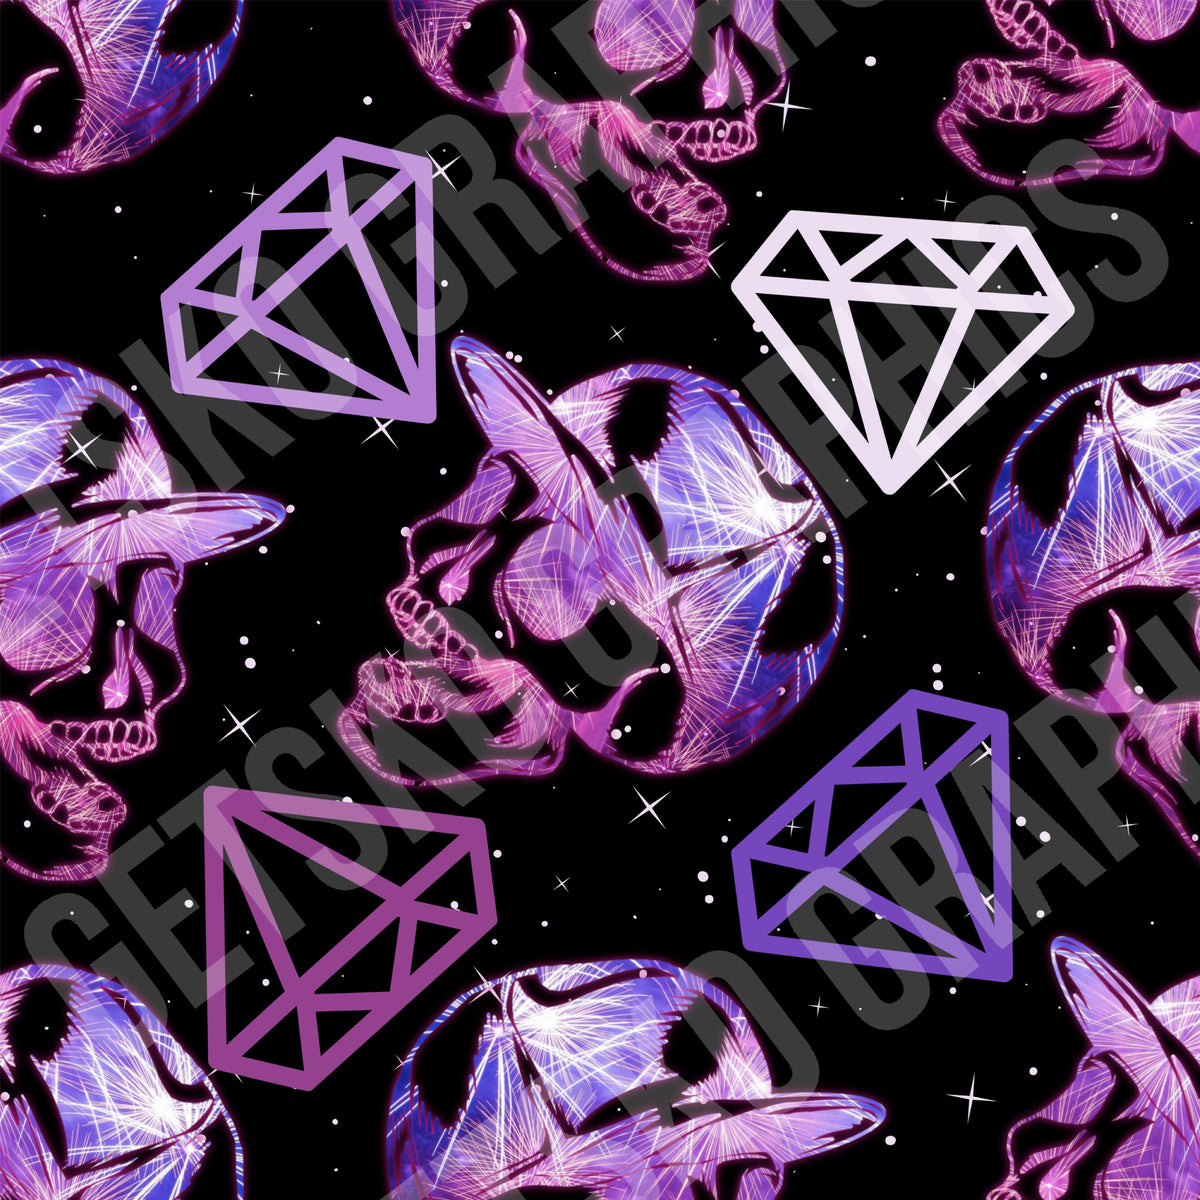 Galaxy Diamond Wallpapers